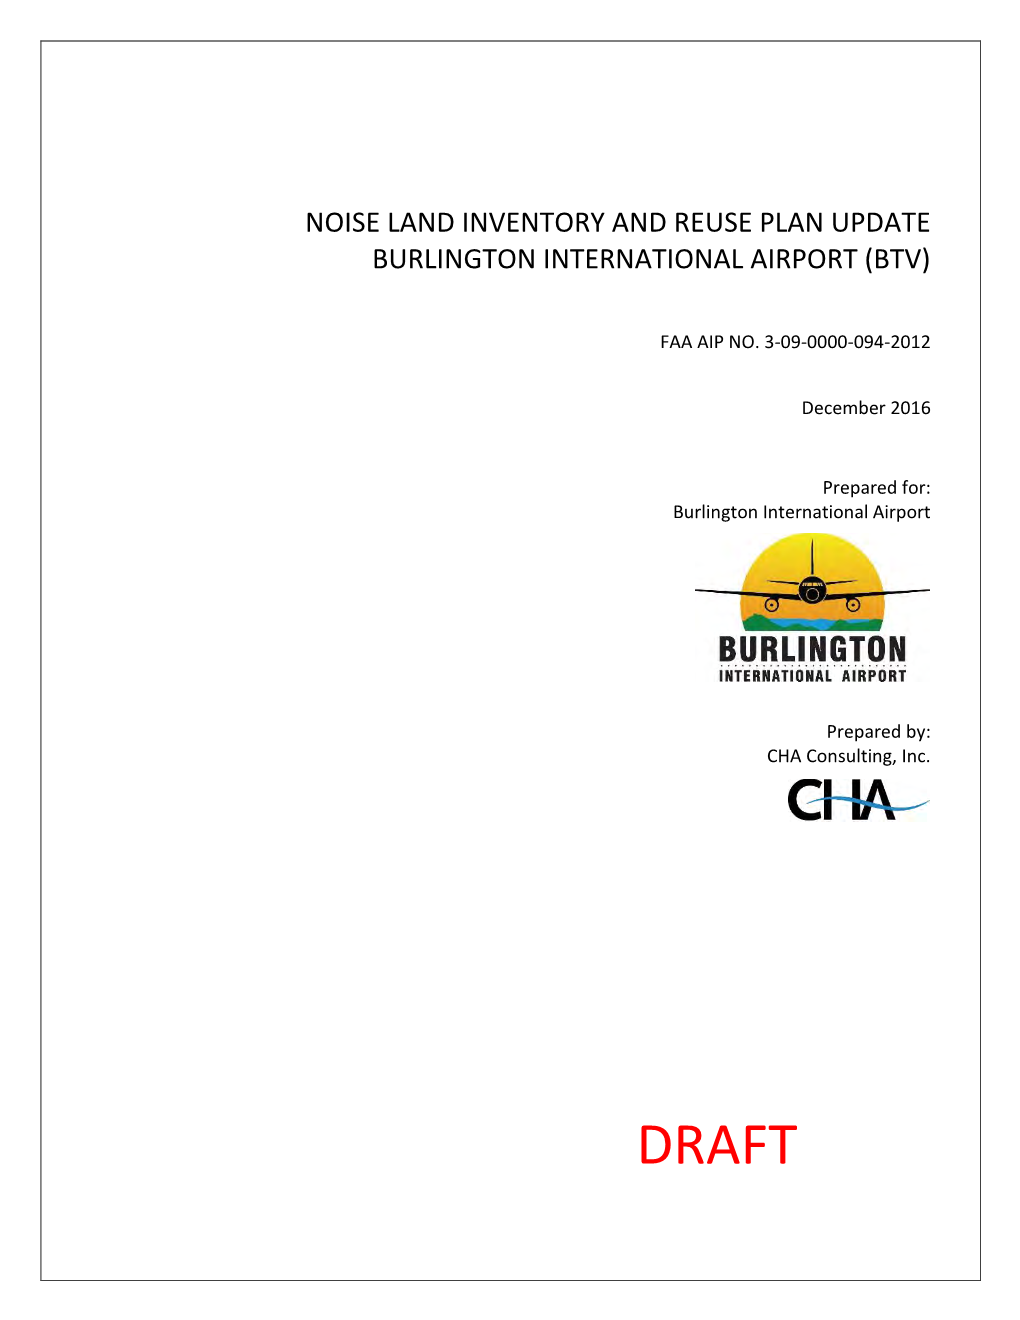 Noise Land Inventory and Reuse Plan Update Burlington International Airport (Btv)